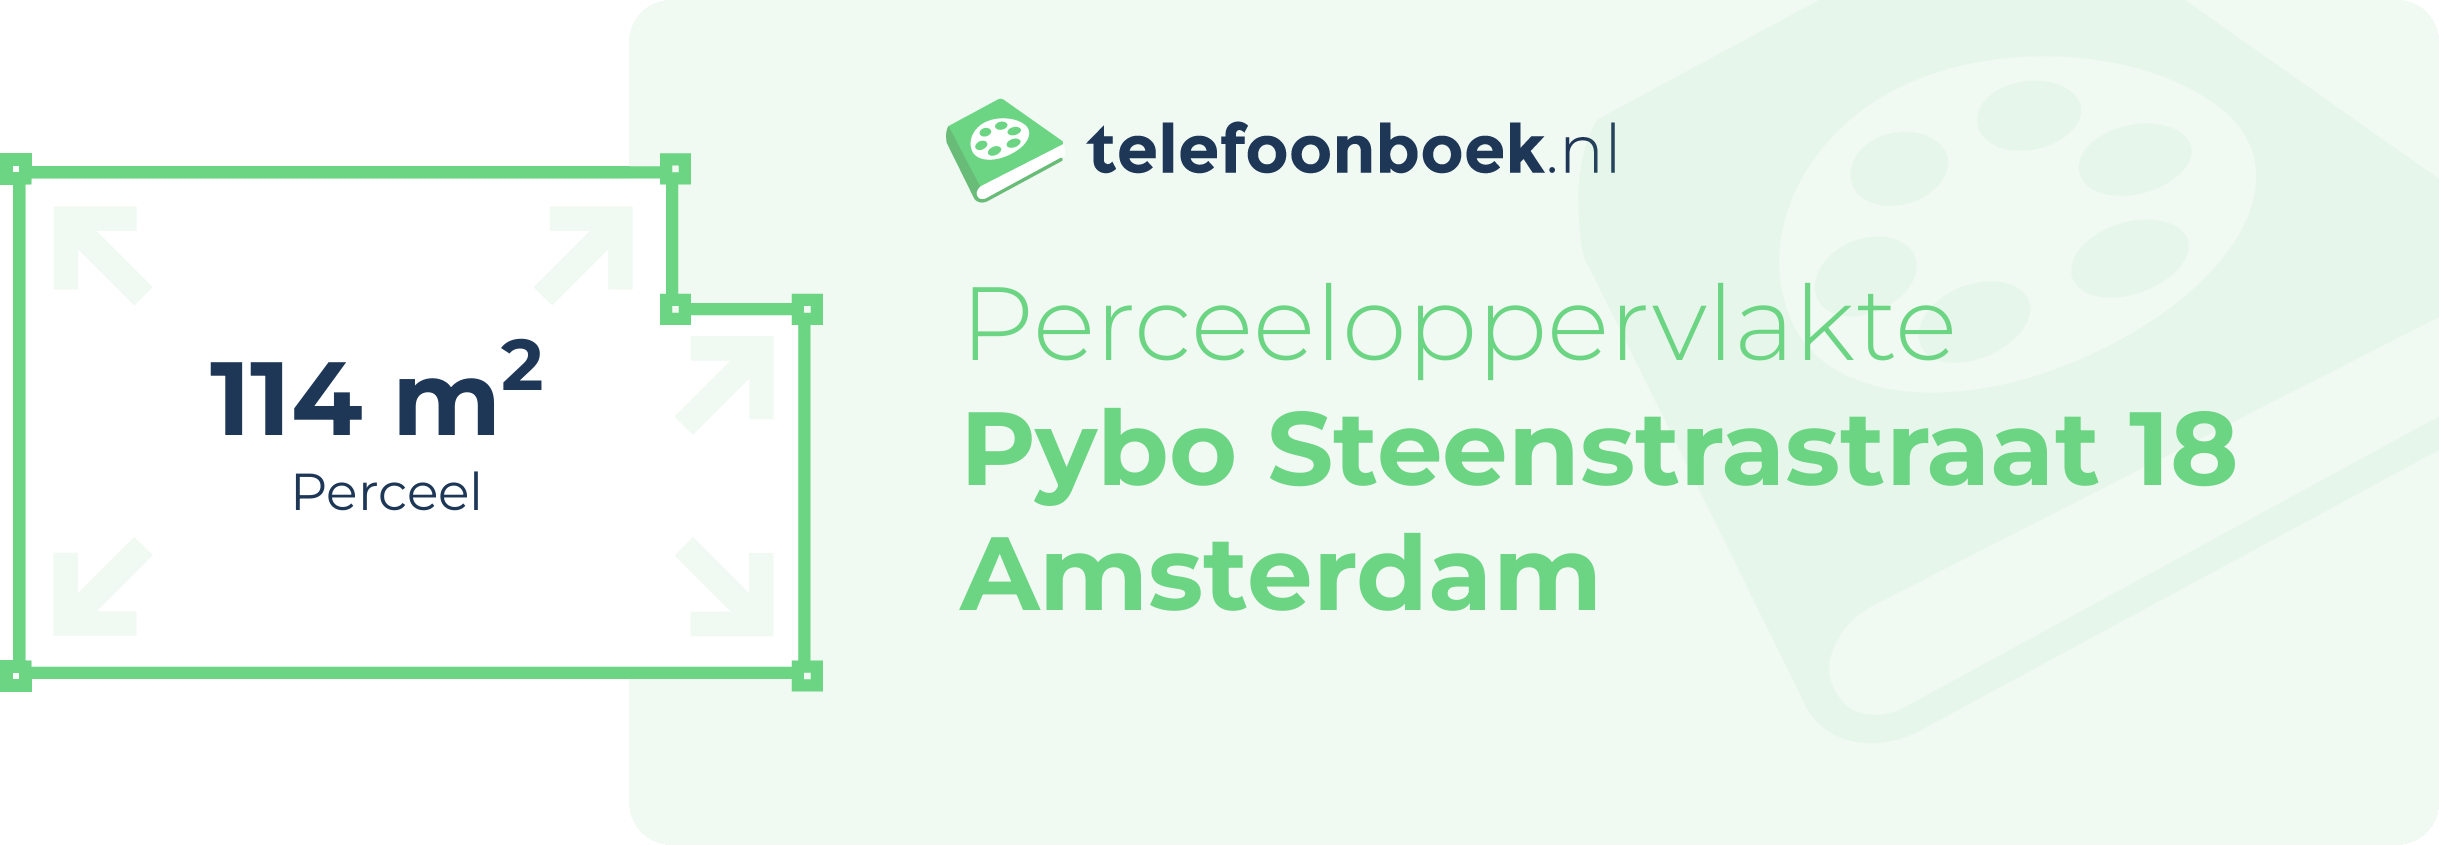 Perceeloppervlakte Pybo Steenstrastraat 18 Amsterdam